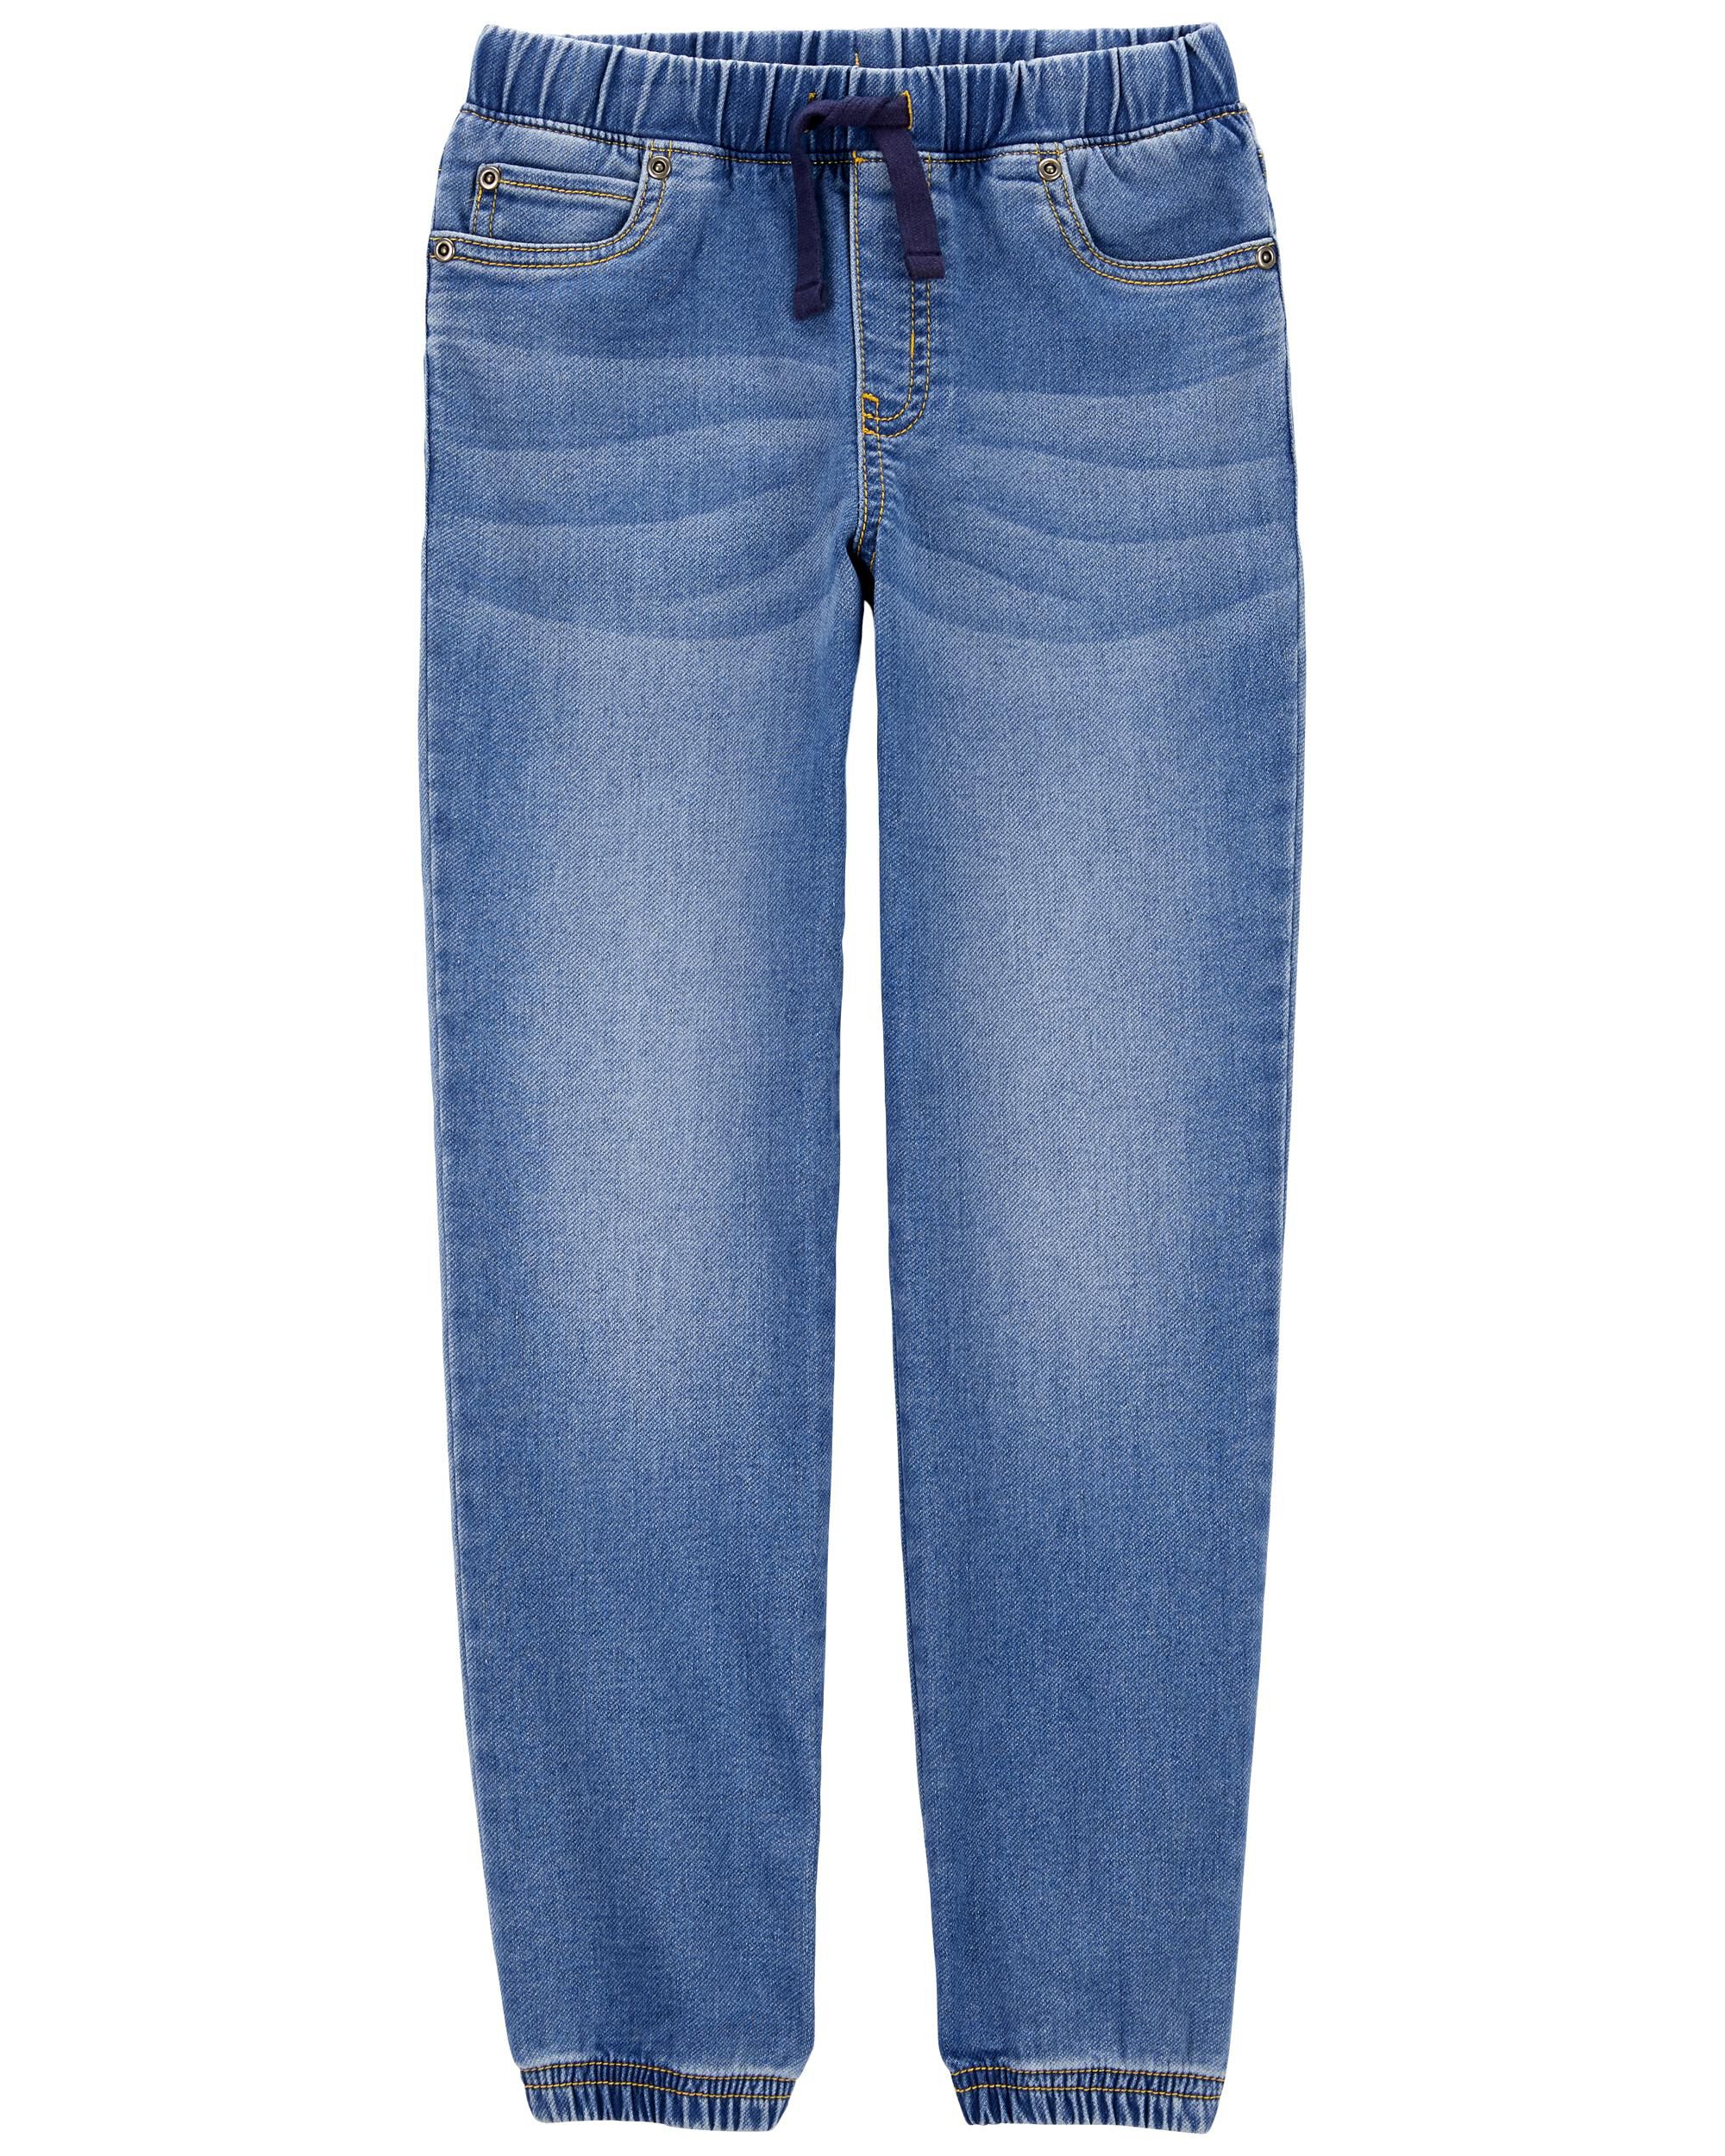 Knox Rose | Jeans | Knox Rose Highrise Flare Denim Pull On Pants Jeans  Light Wash Nwt Plus Size 26w | Poshmark